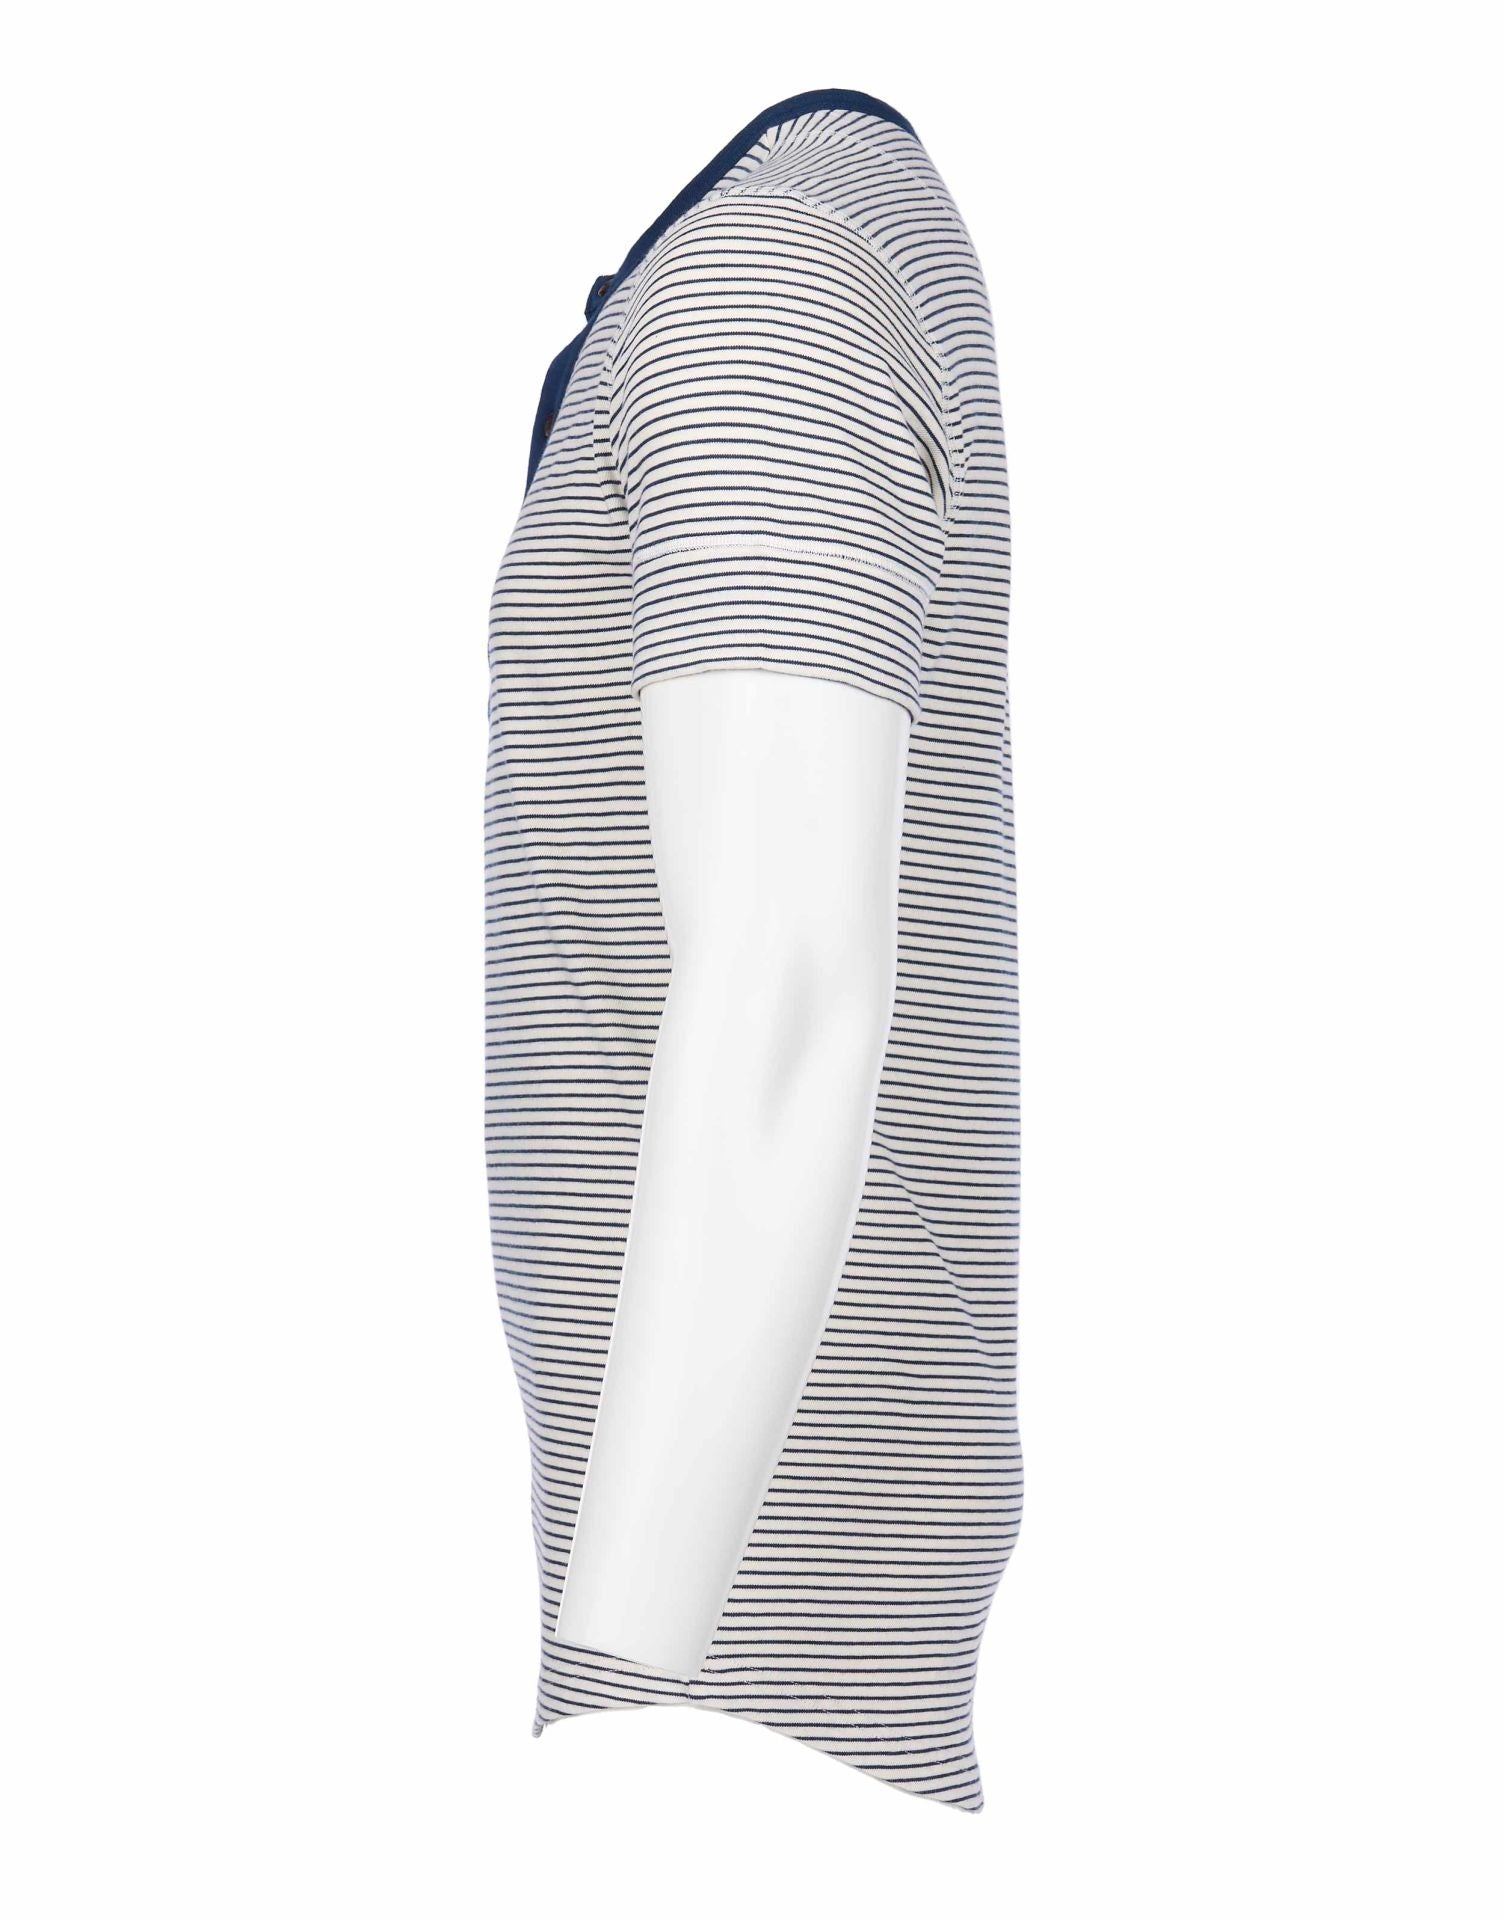 1927 Henley Shirt short sleeve - bongo blue